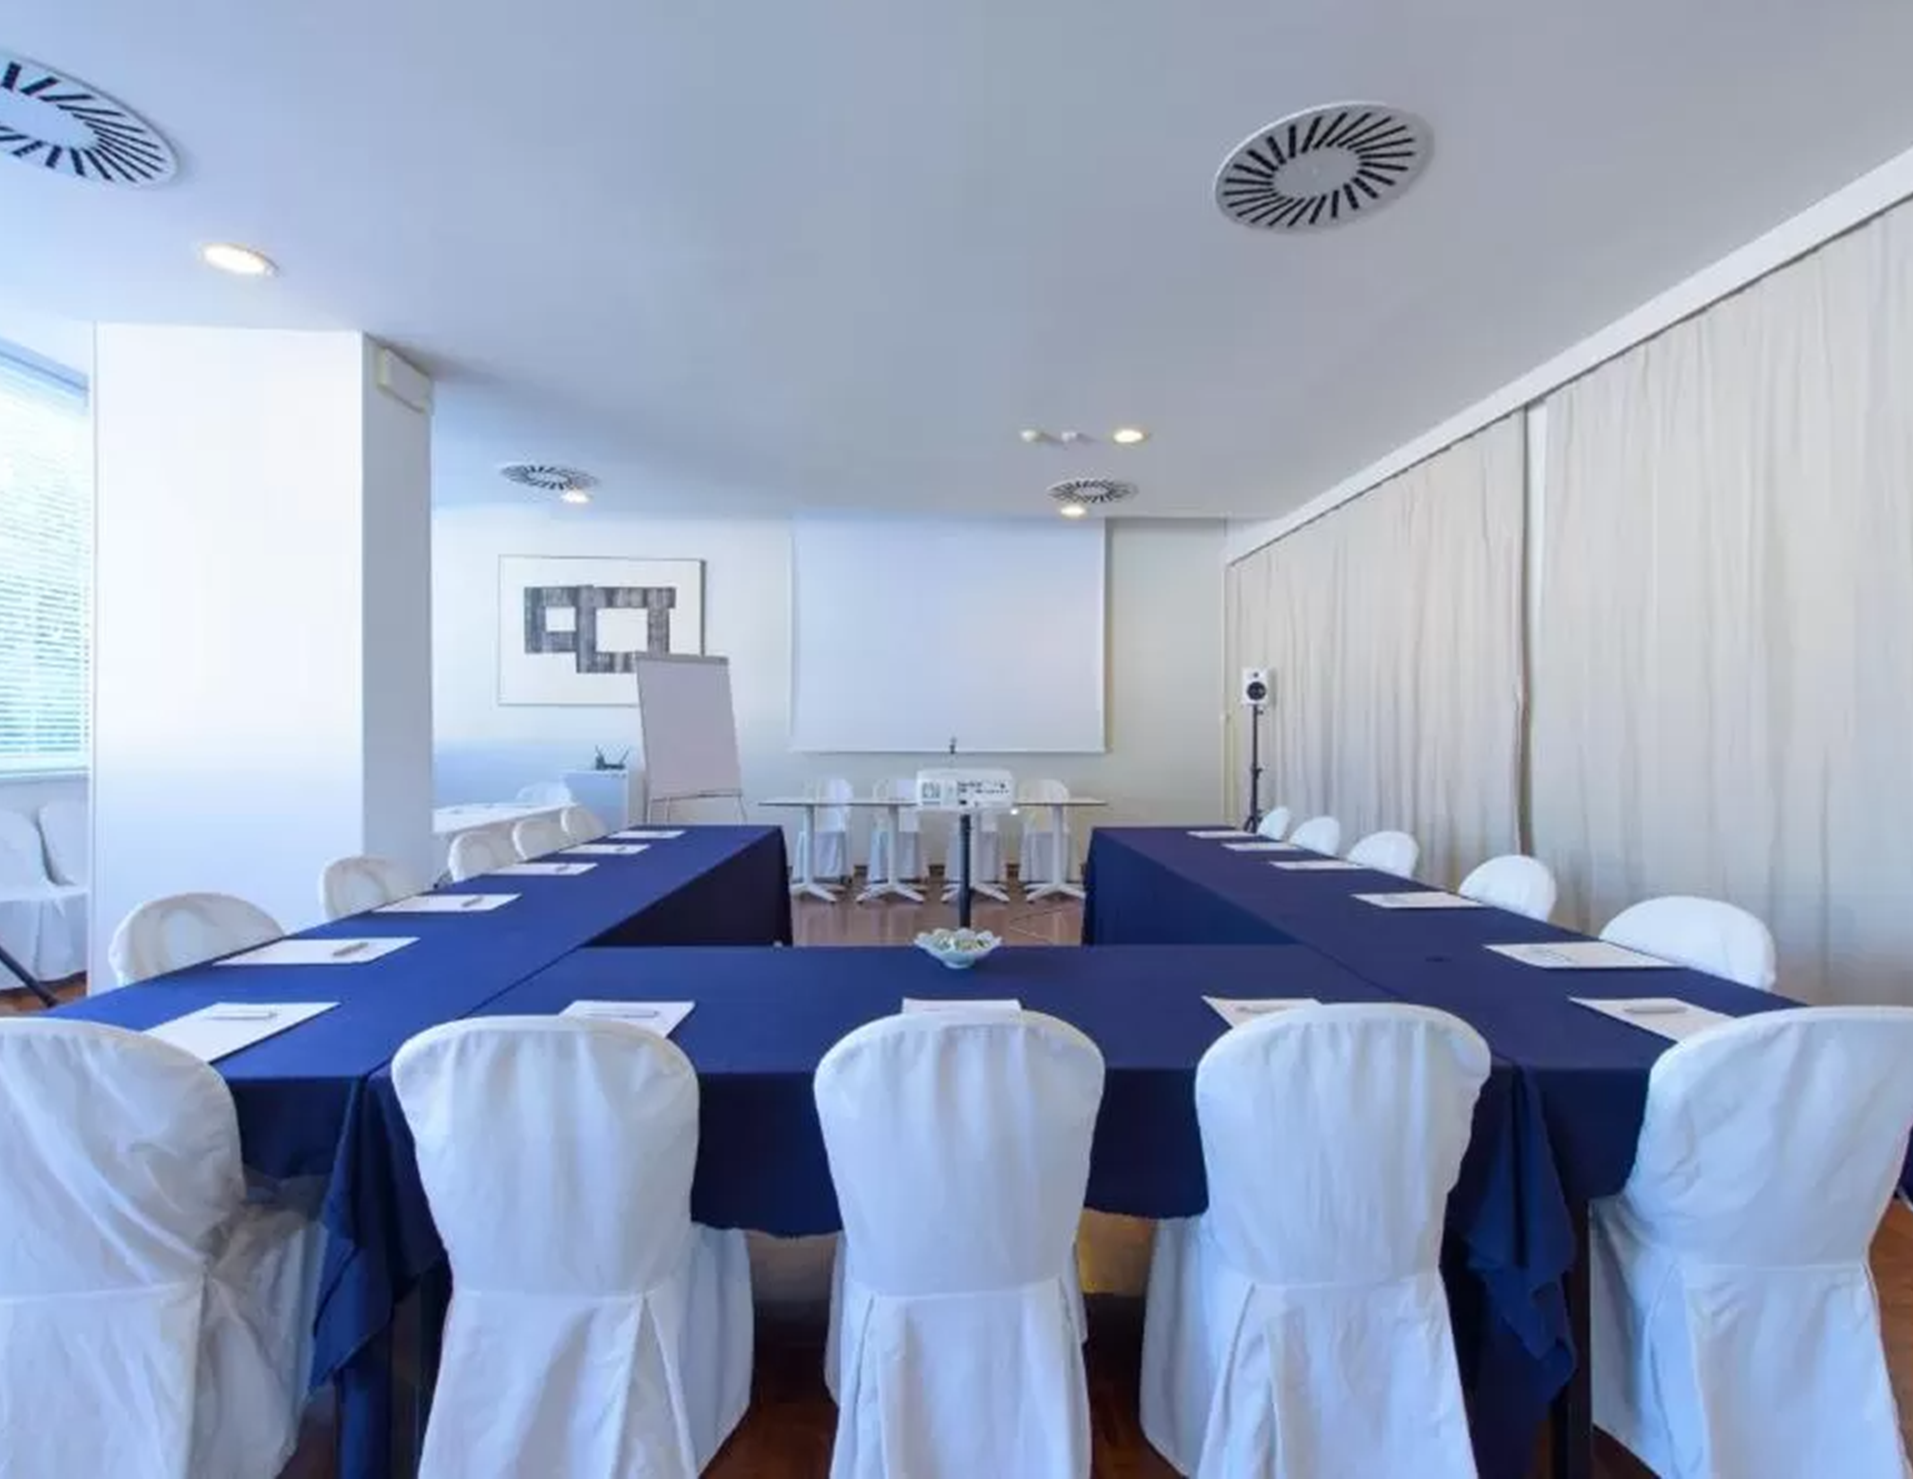 Hotel Cristallo - Meeting Room